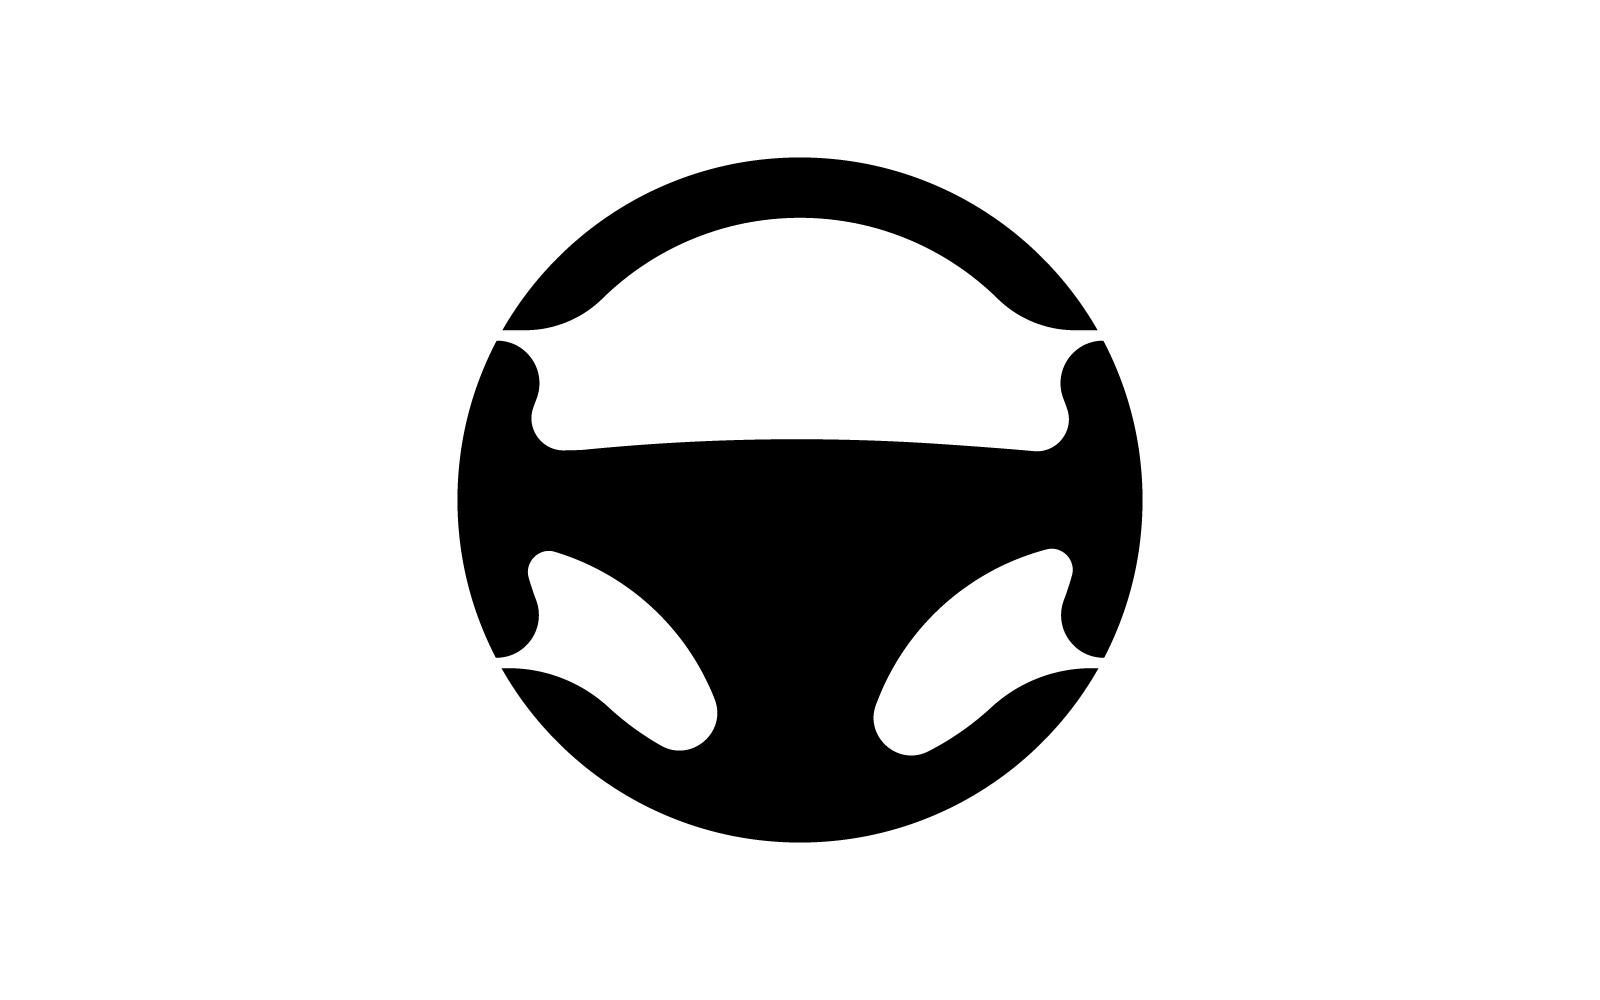 Steering wheel logo design vector template